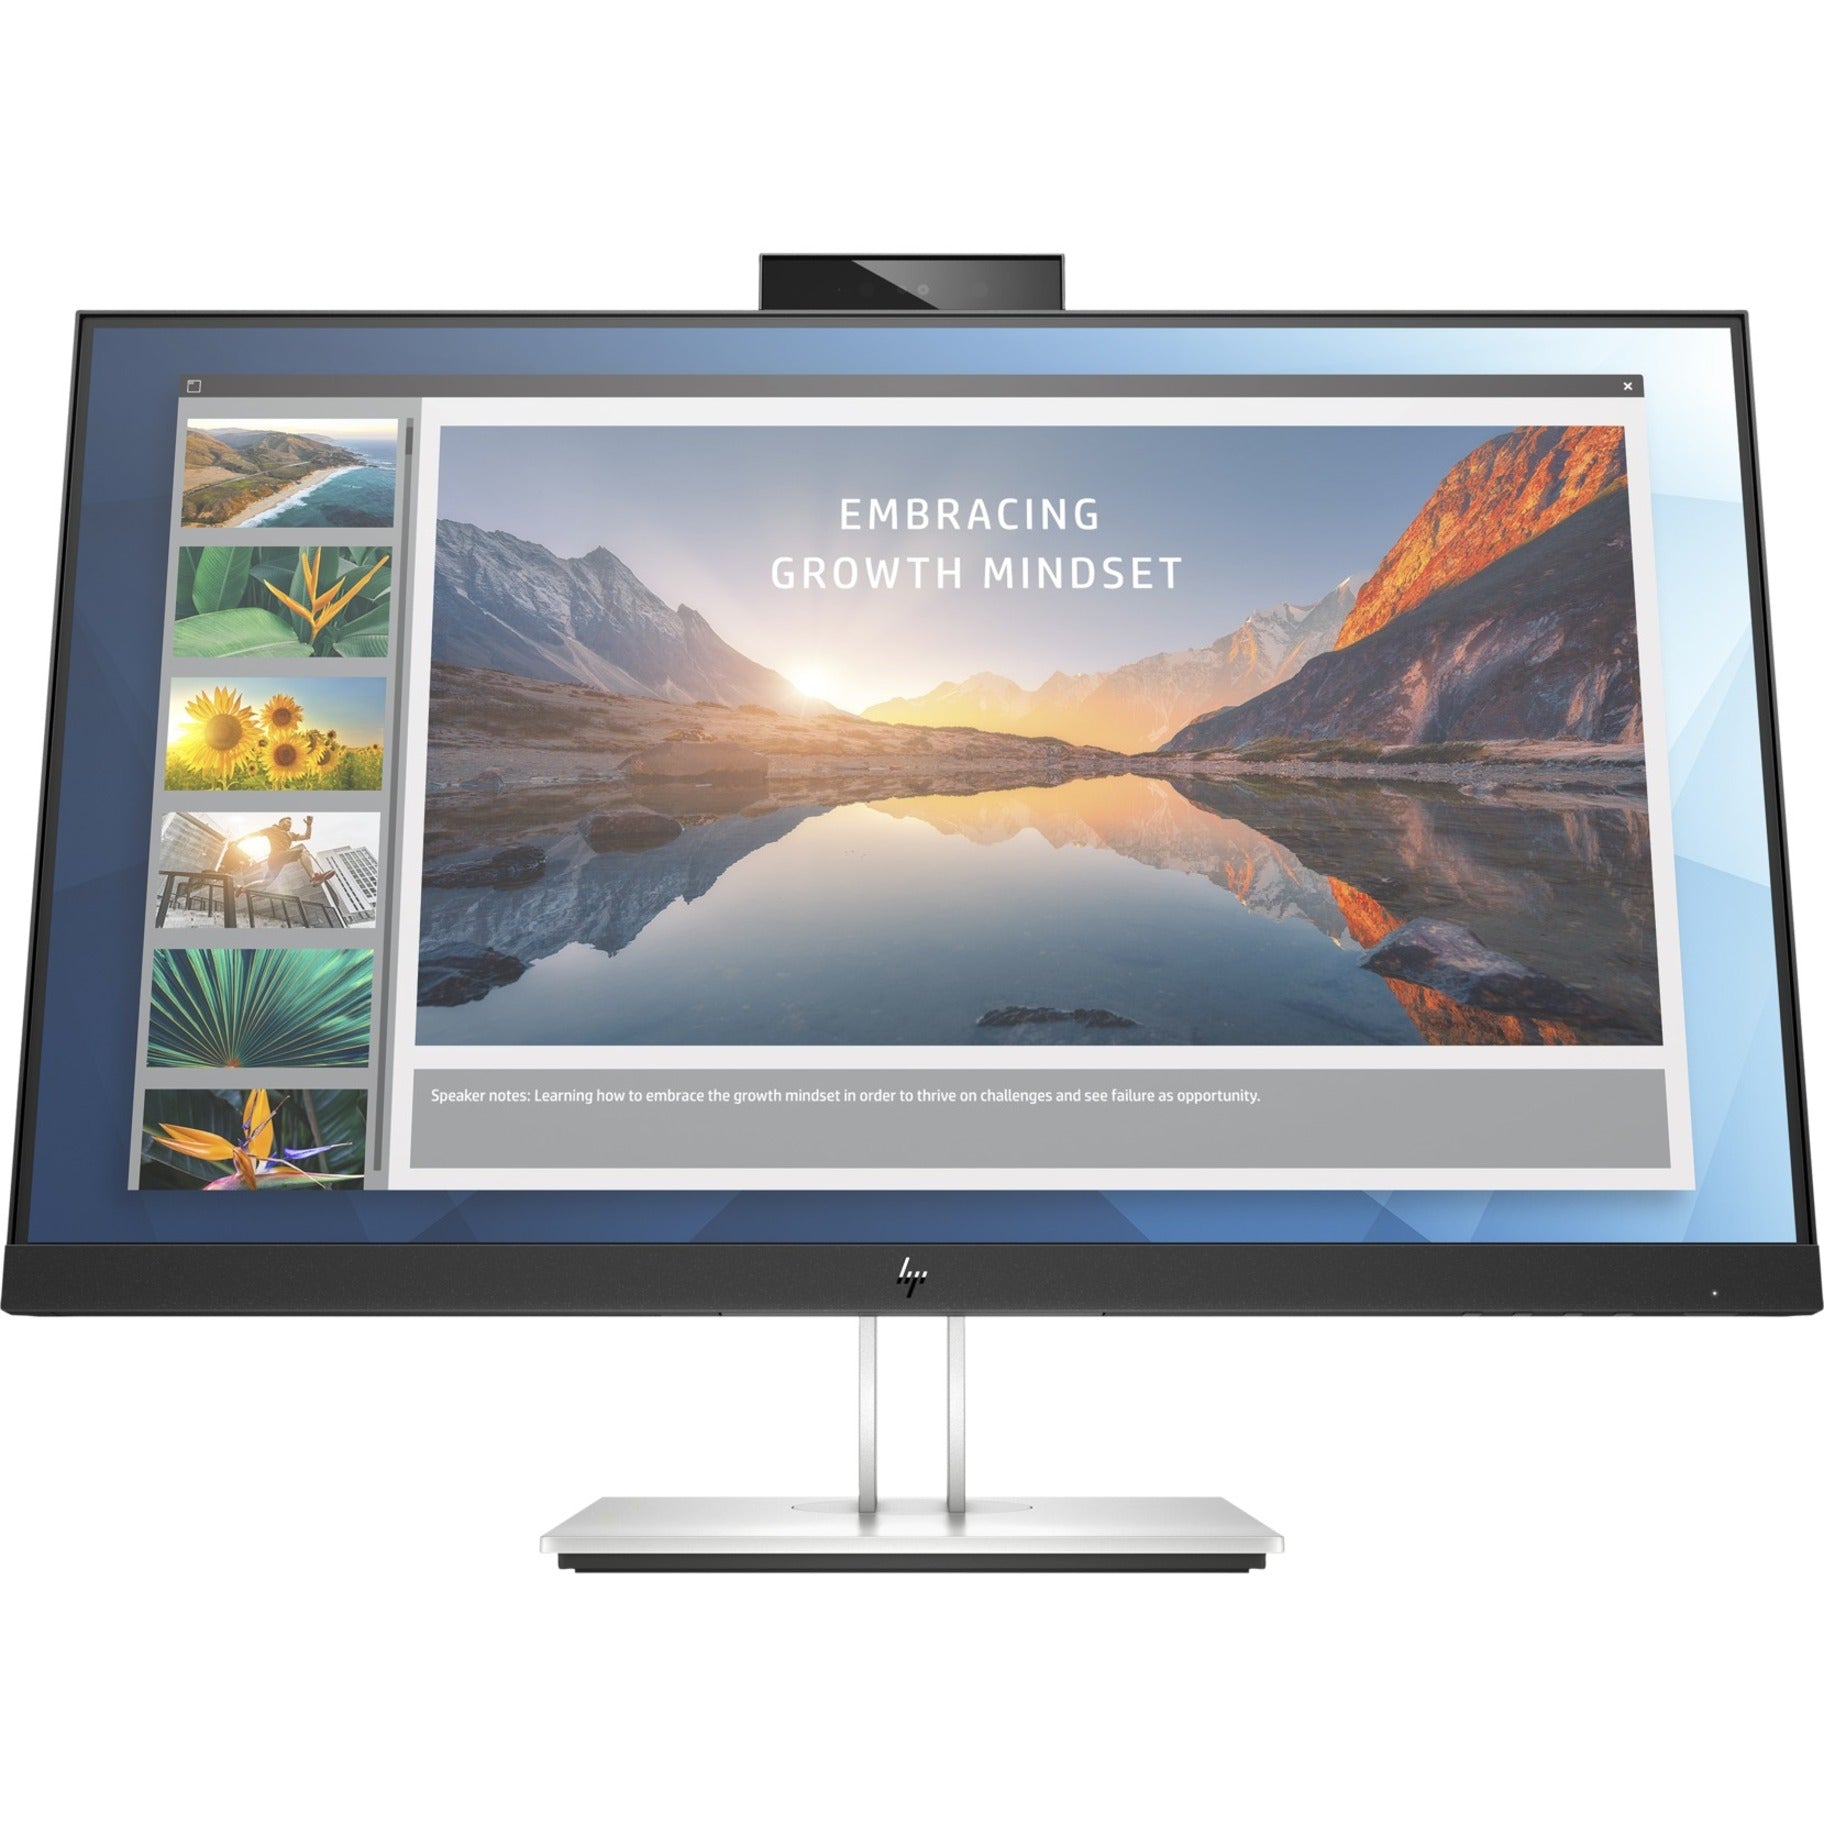 HP E24d G4 FHD Advanced Docking Monitor, 24", Low Blue Light, Anti-glare, USB Hub [Discontinued]